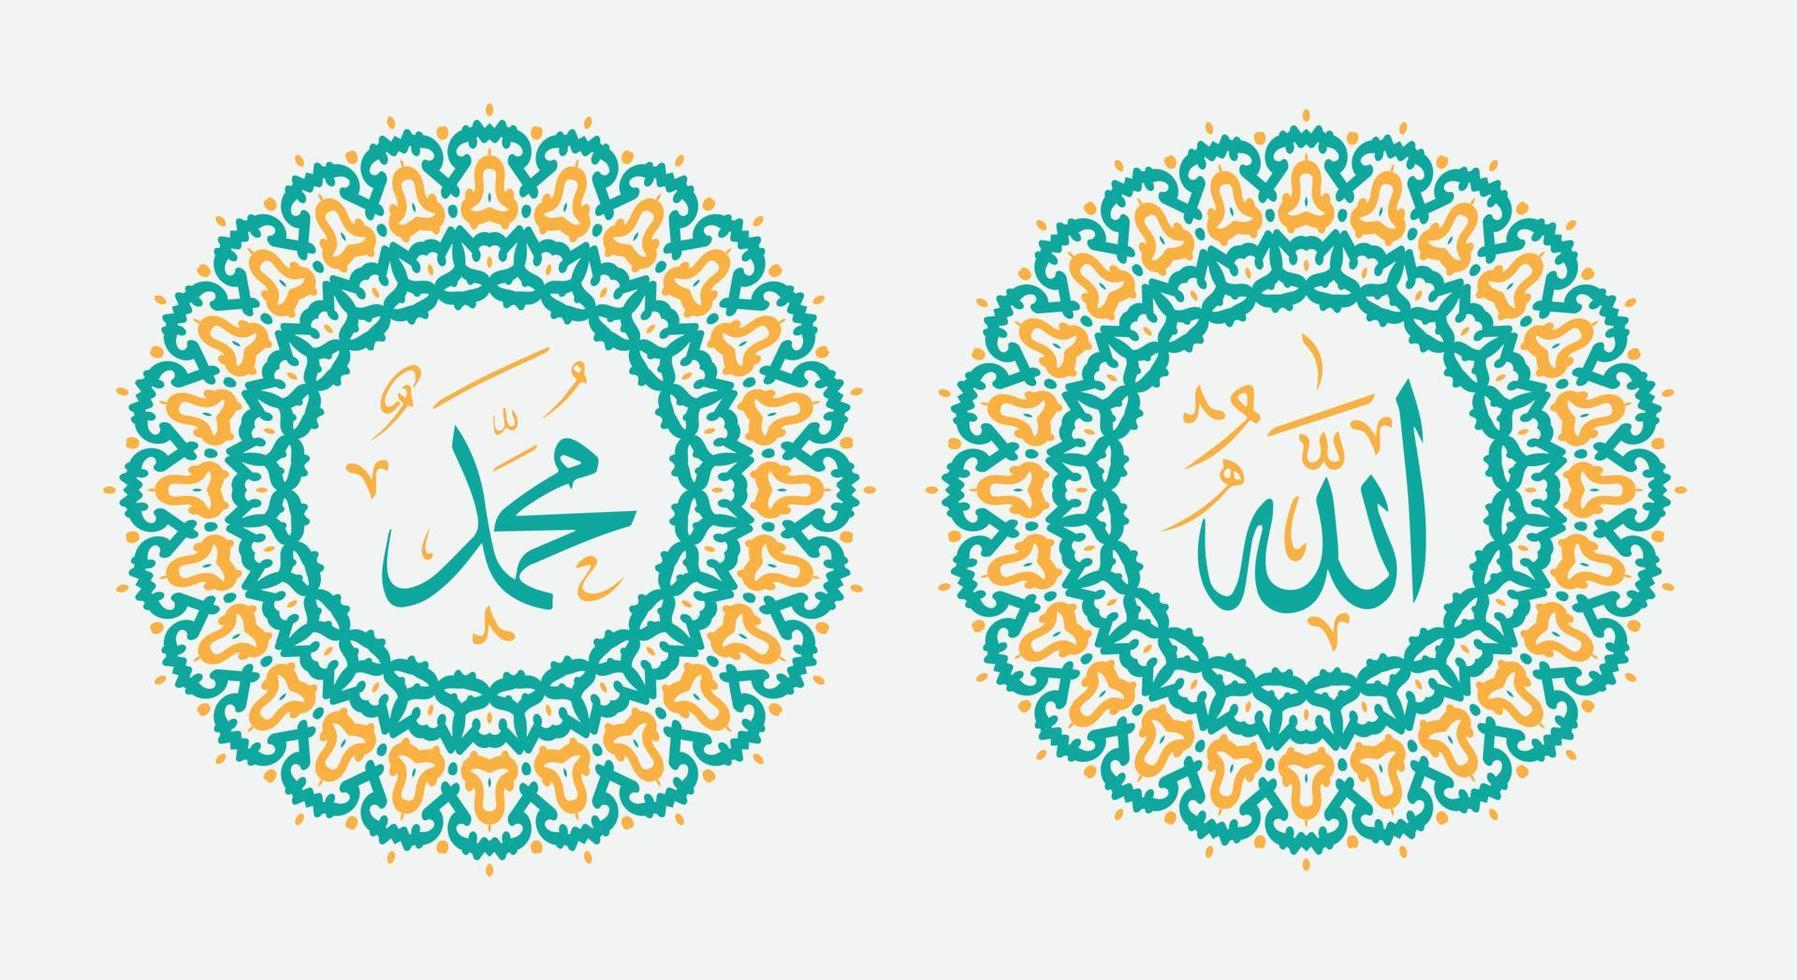 caligrafía árabe de allah muhammad con adorno redondo y color fresco vector